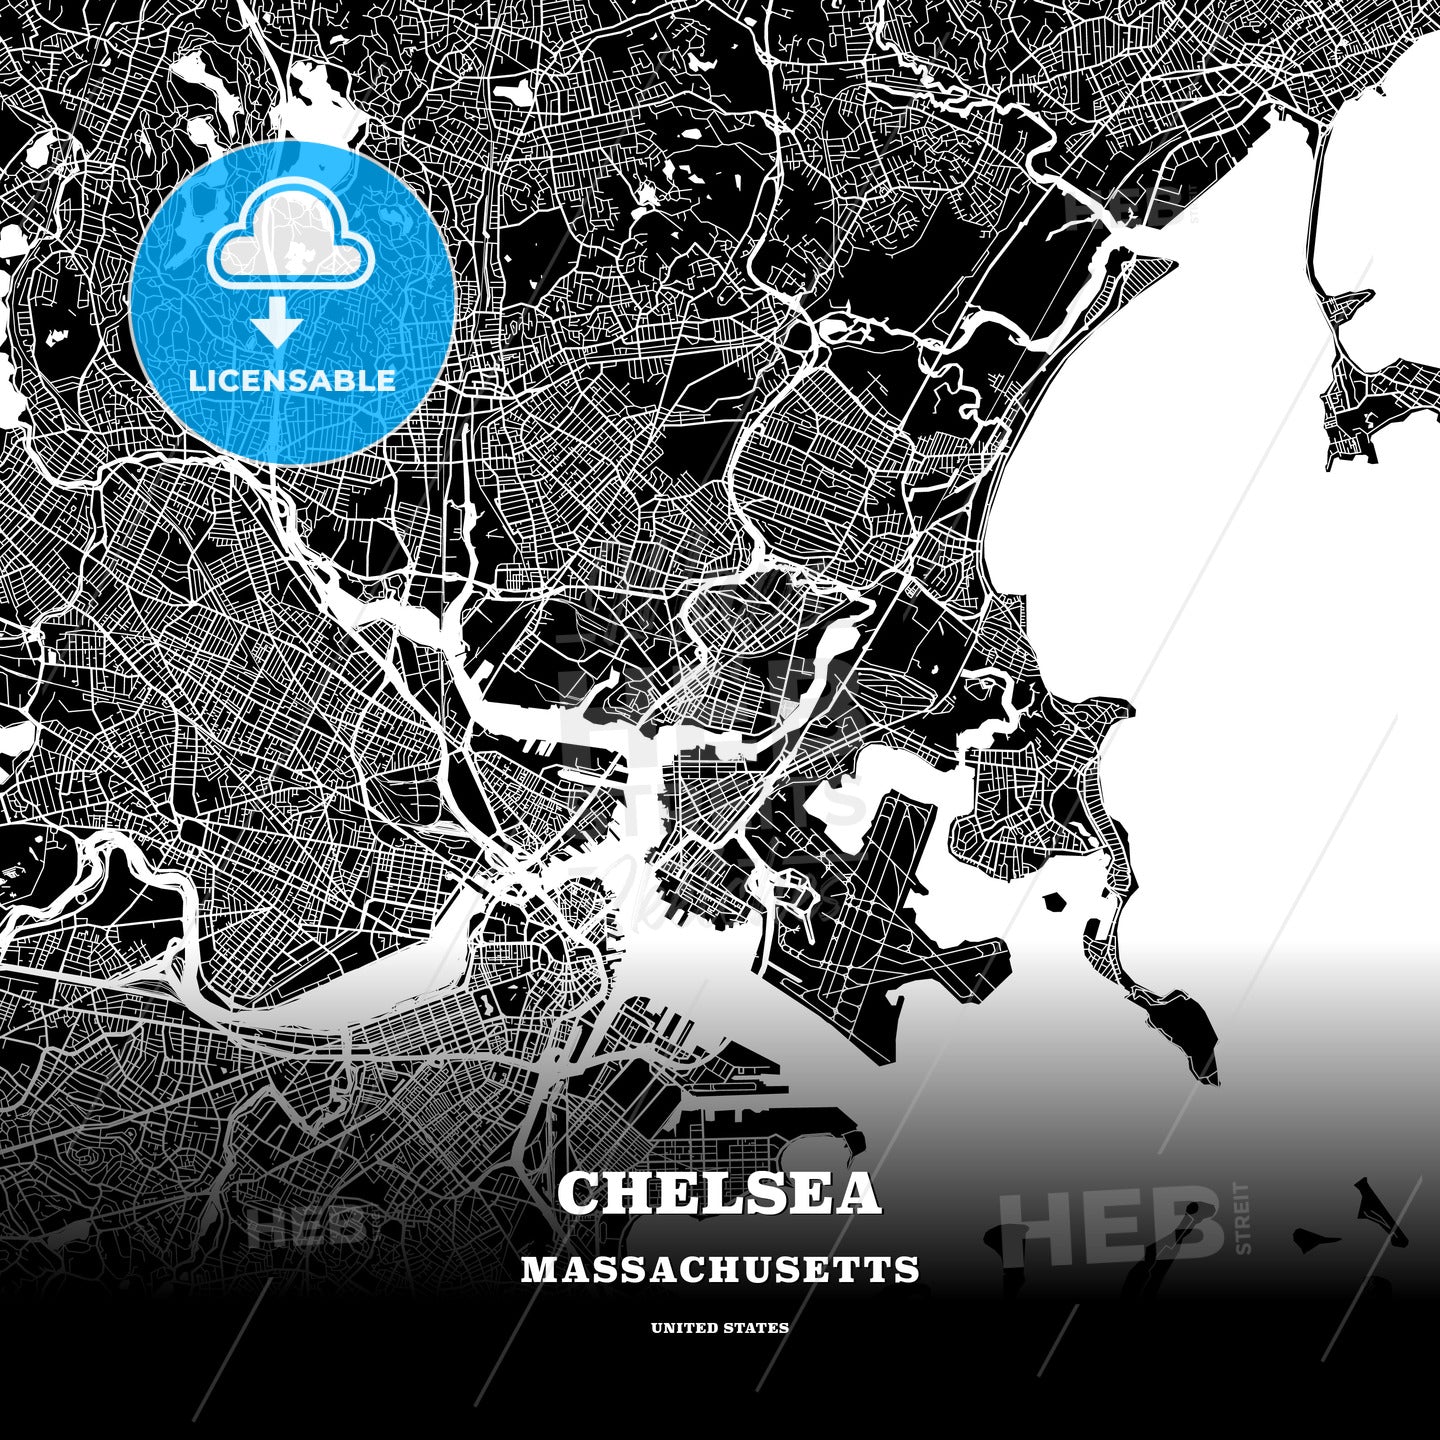 Chelsea, Massachusetts, USA map